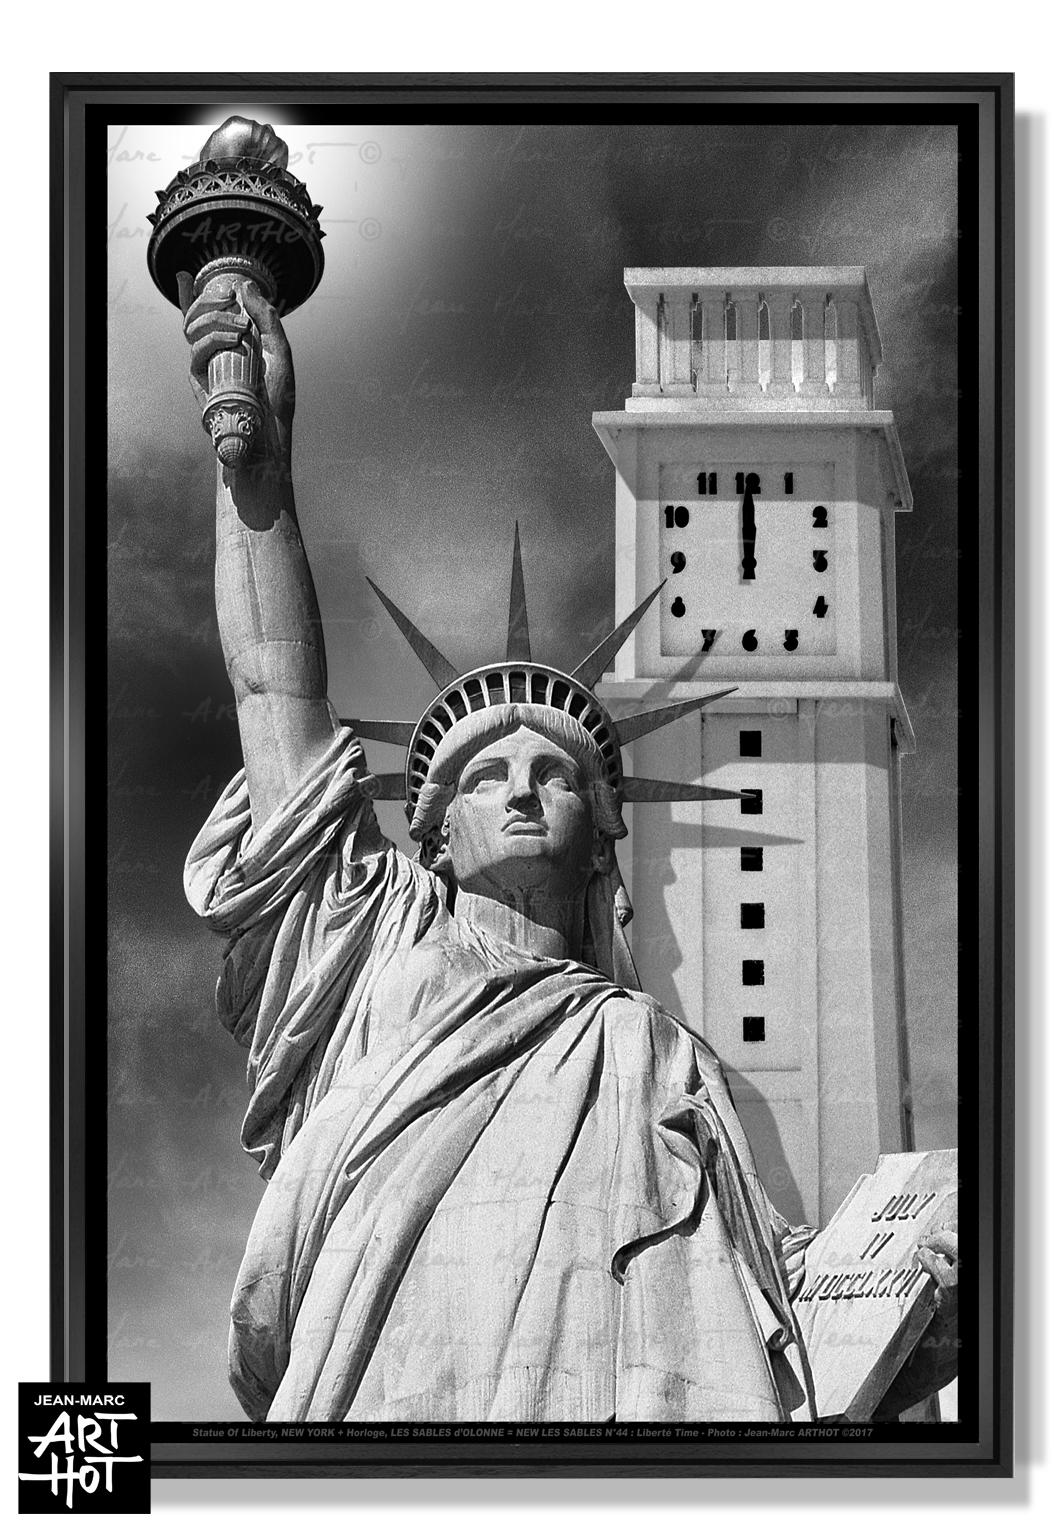 arthot-photo-art-b&w-new-york-vendee-sables-olonne-newlessables-044-liberty-horloge-vertic